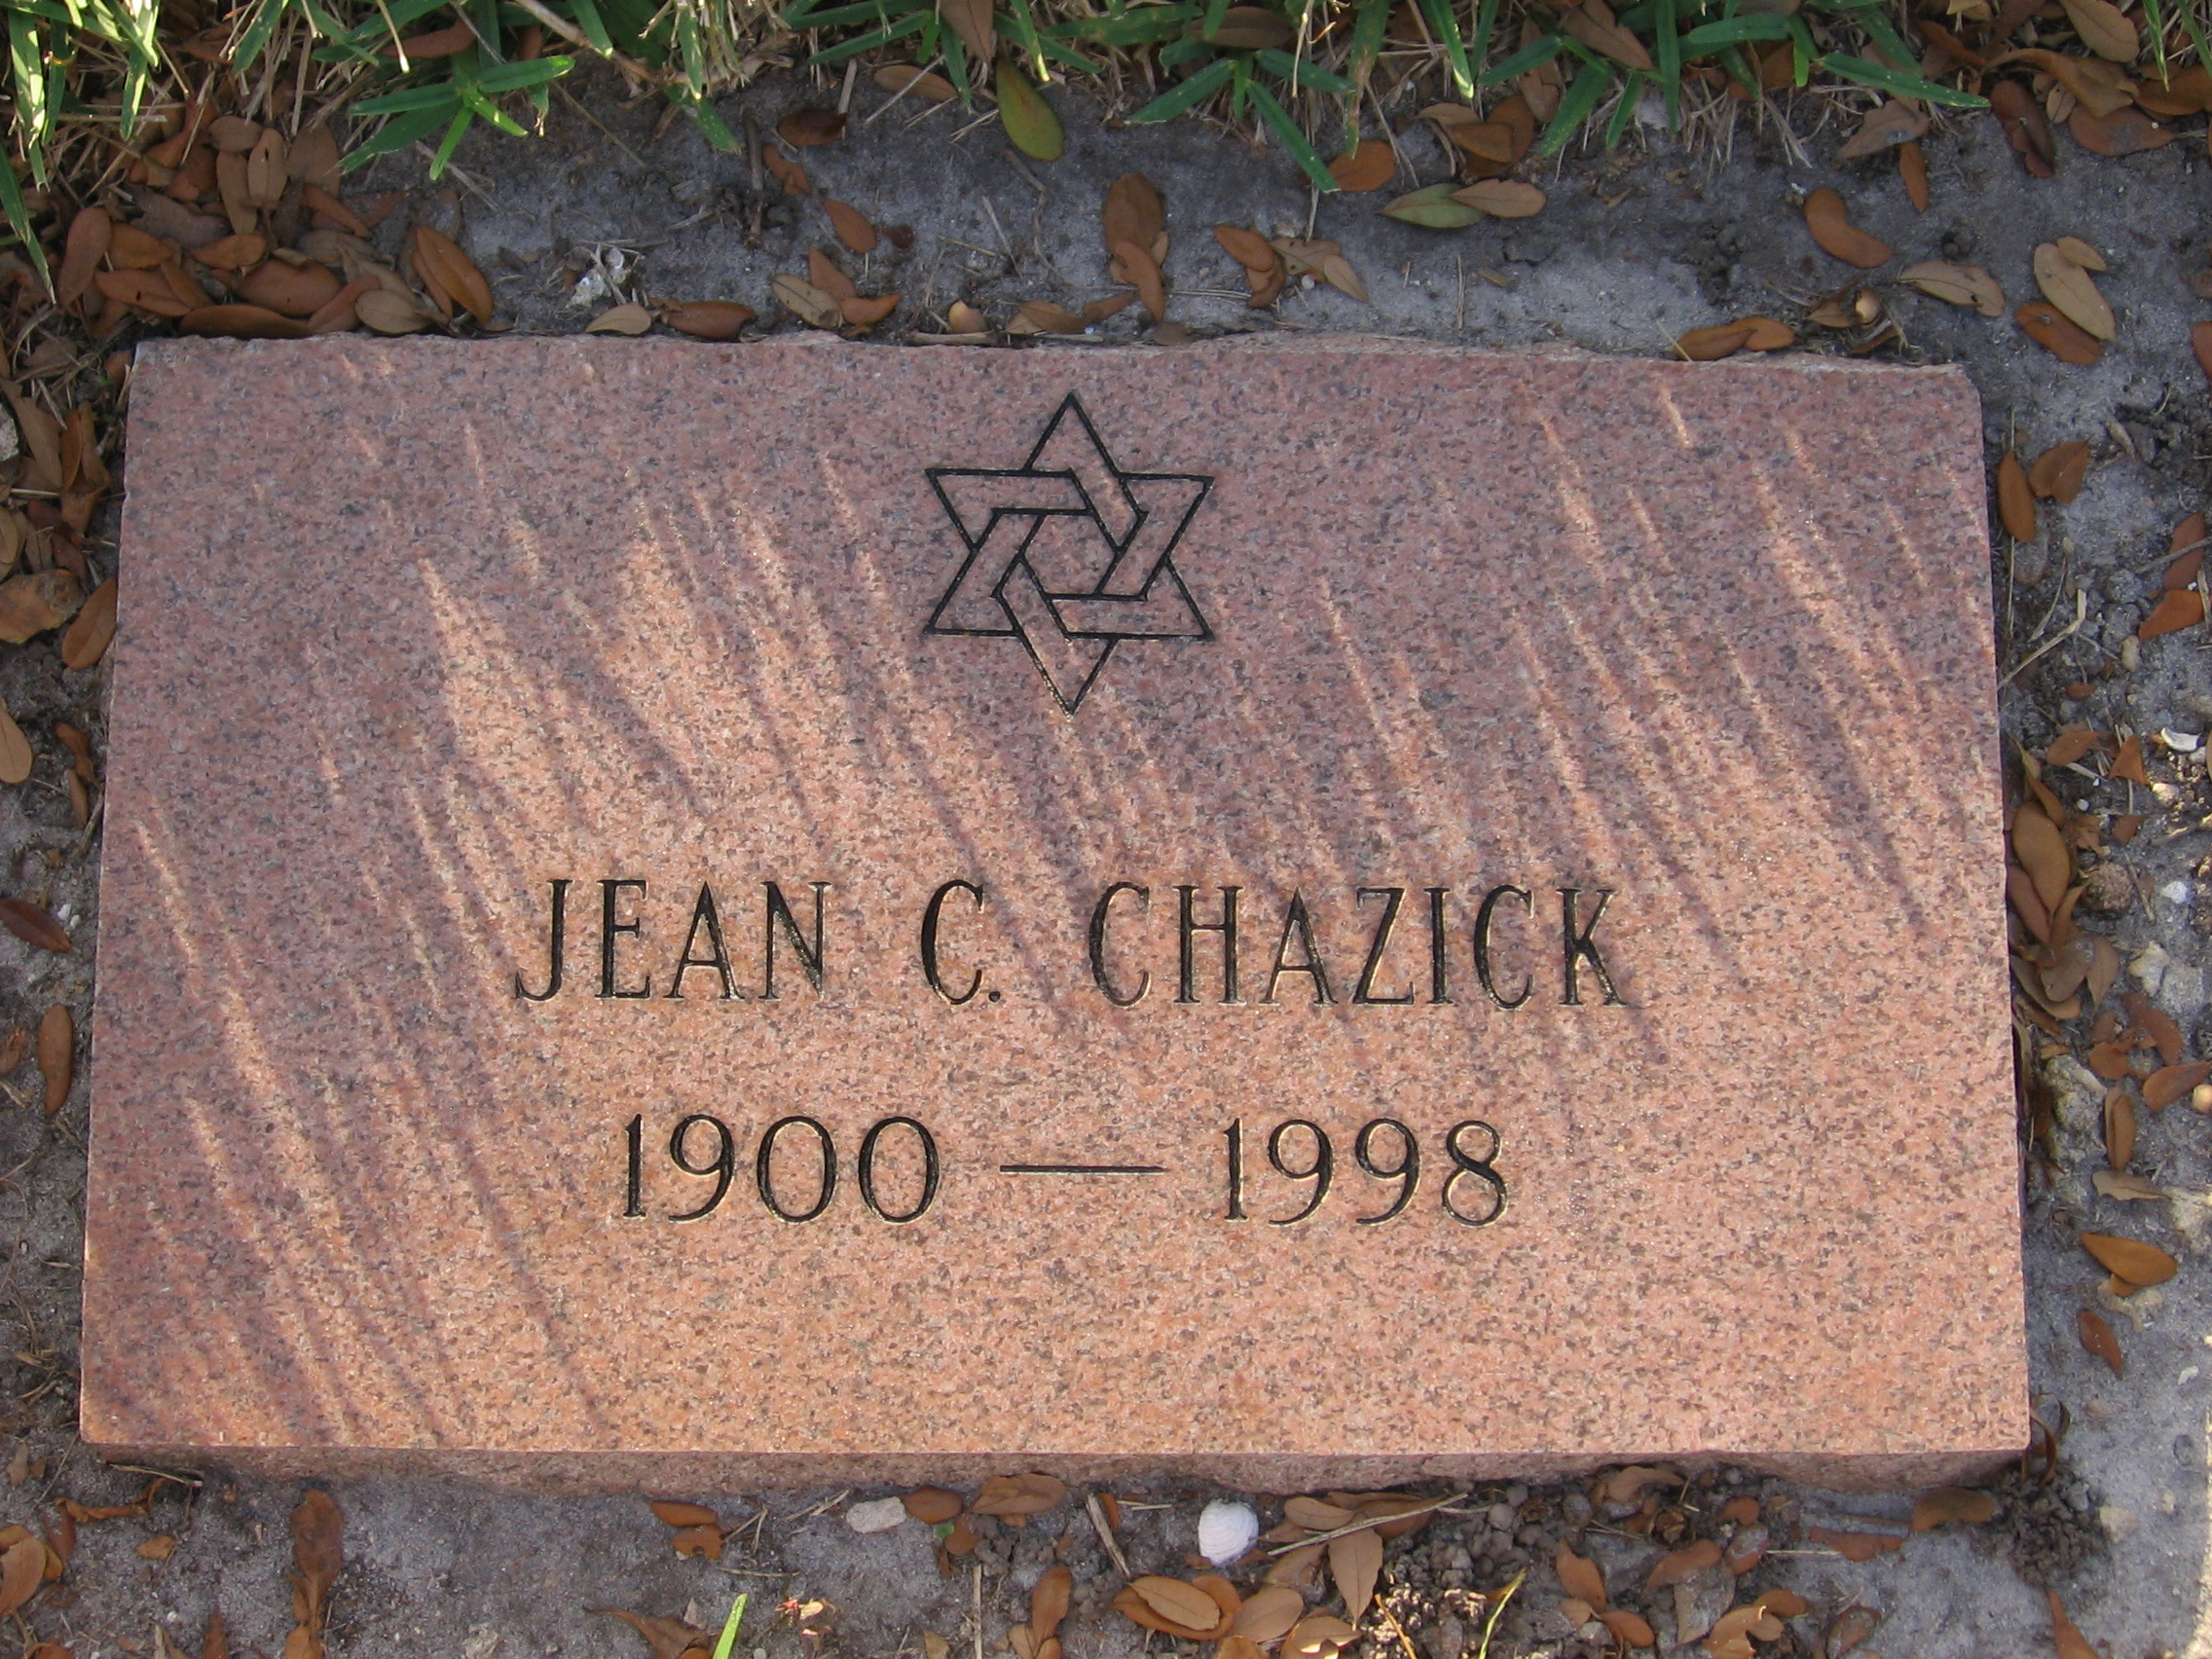 Jean C Chazick